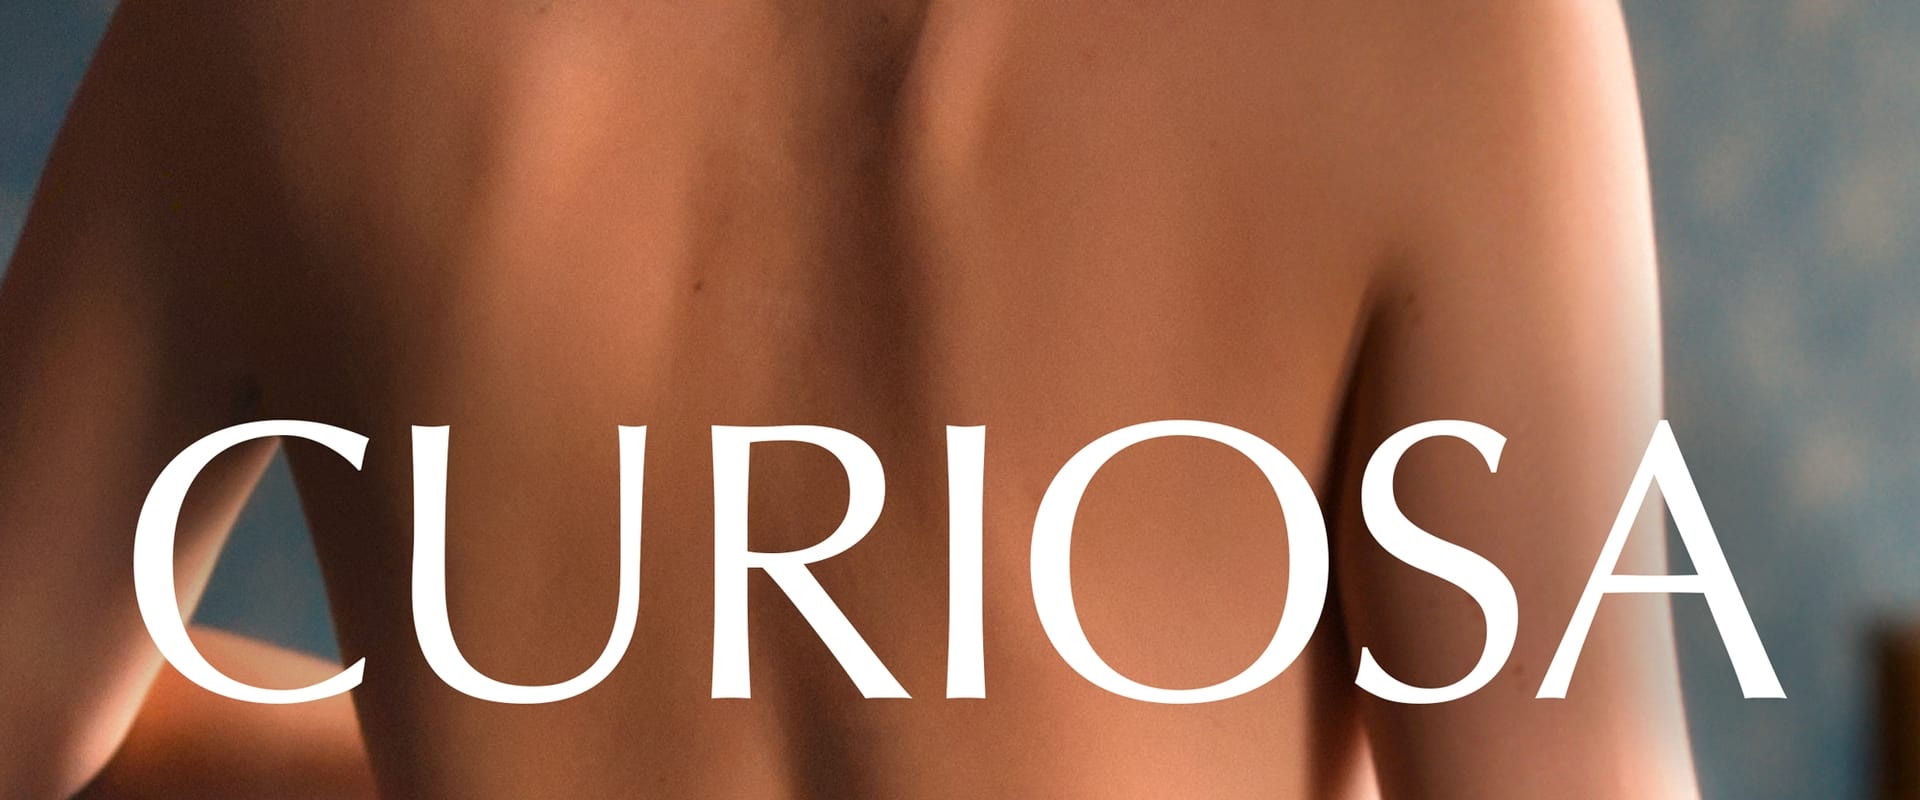 Curiosa [HD] (2019)